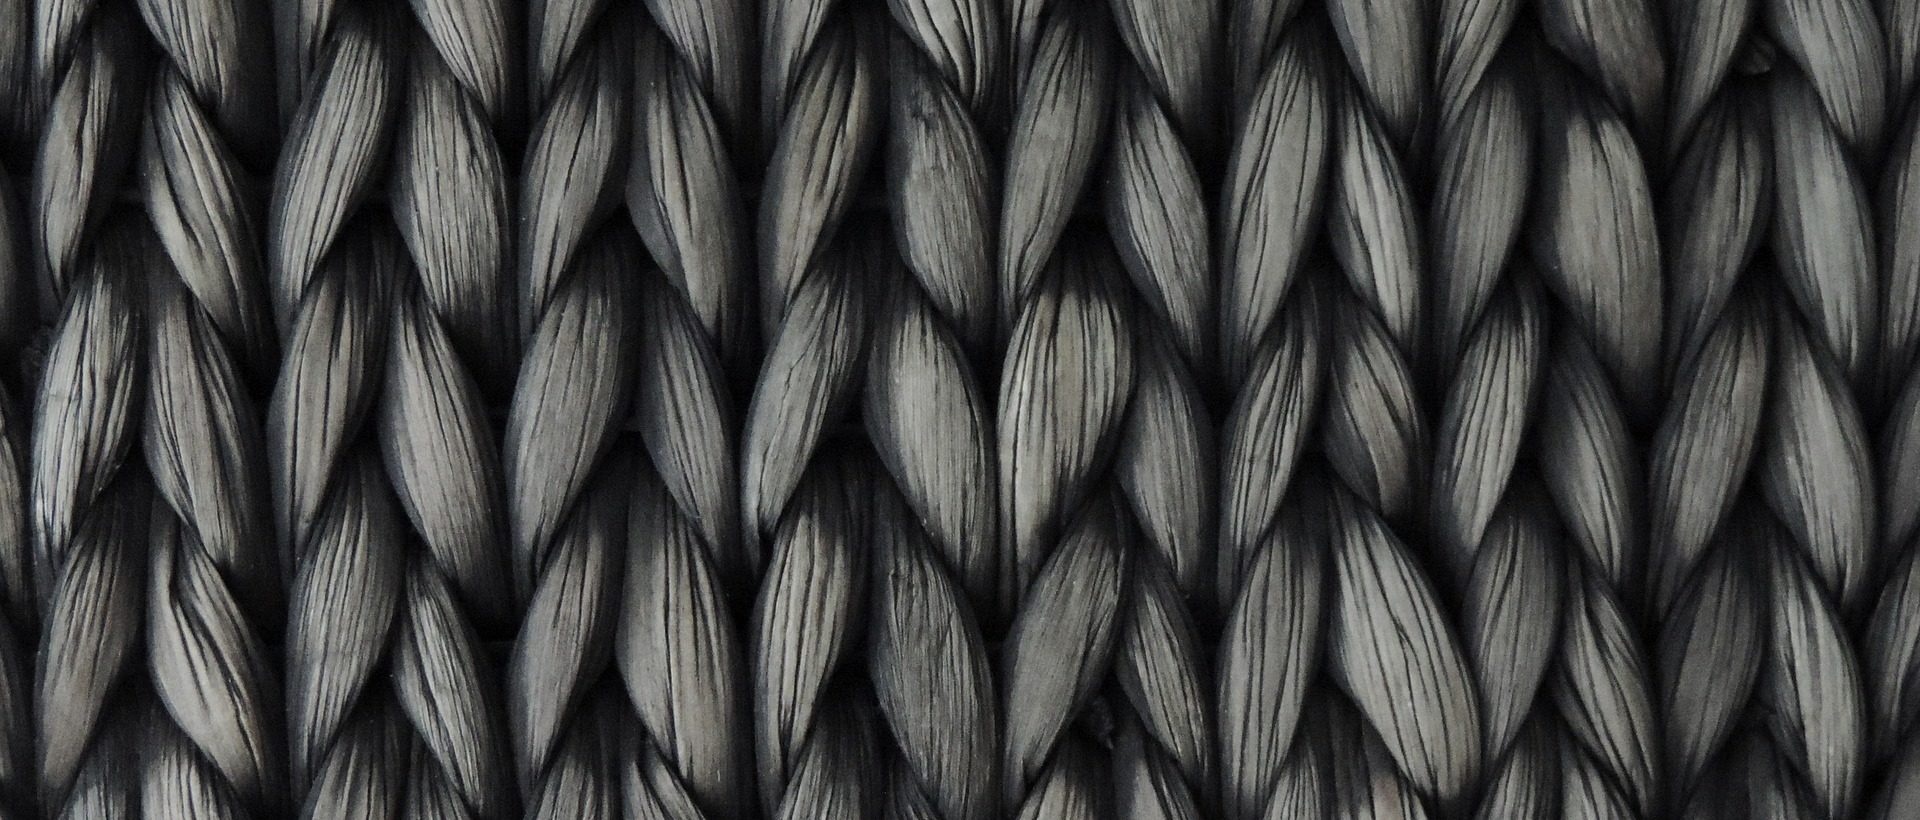 3 Basic Types of Fabric: Synthetic Fiber, Semi-Synthetic Fiber